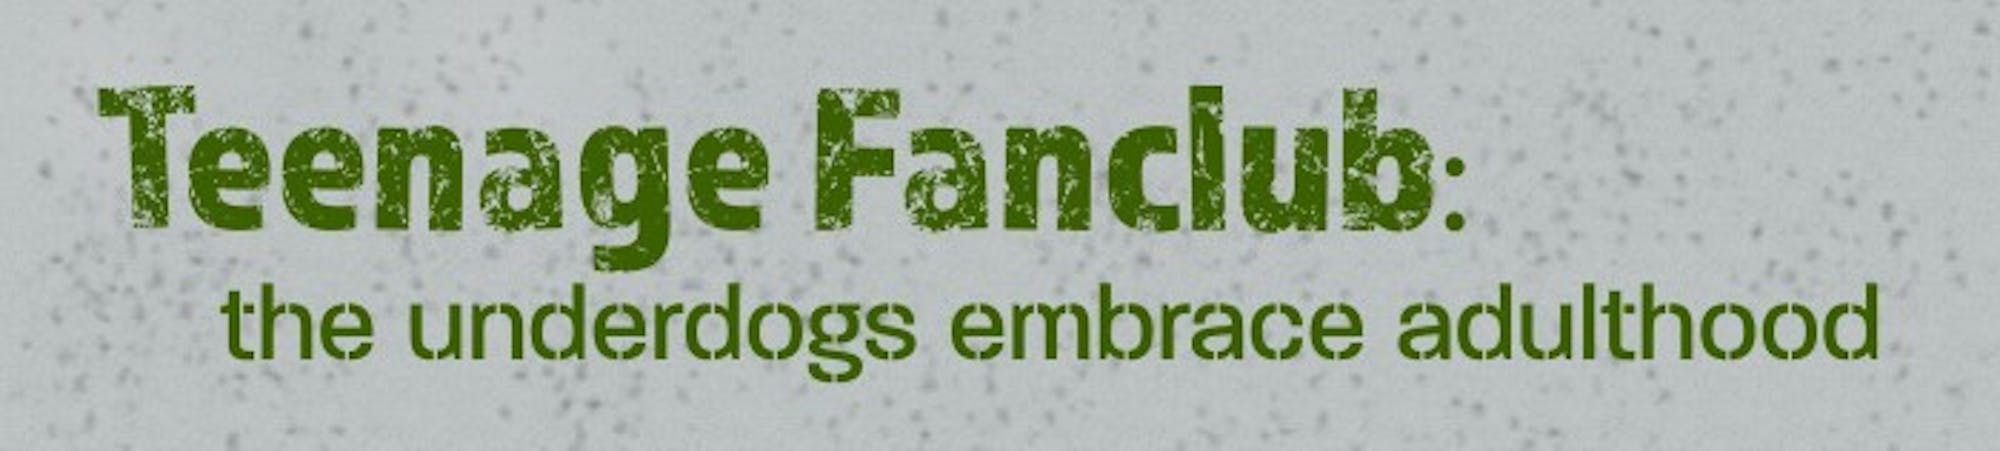 Teenage_fanclub_banner